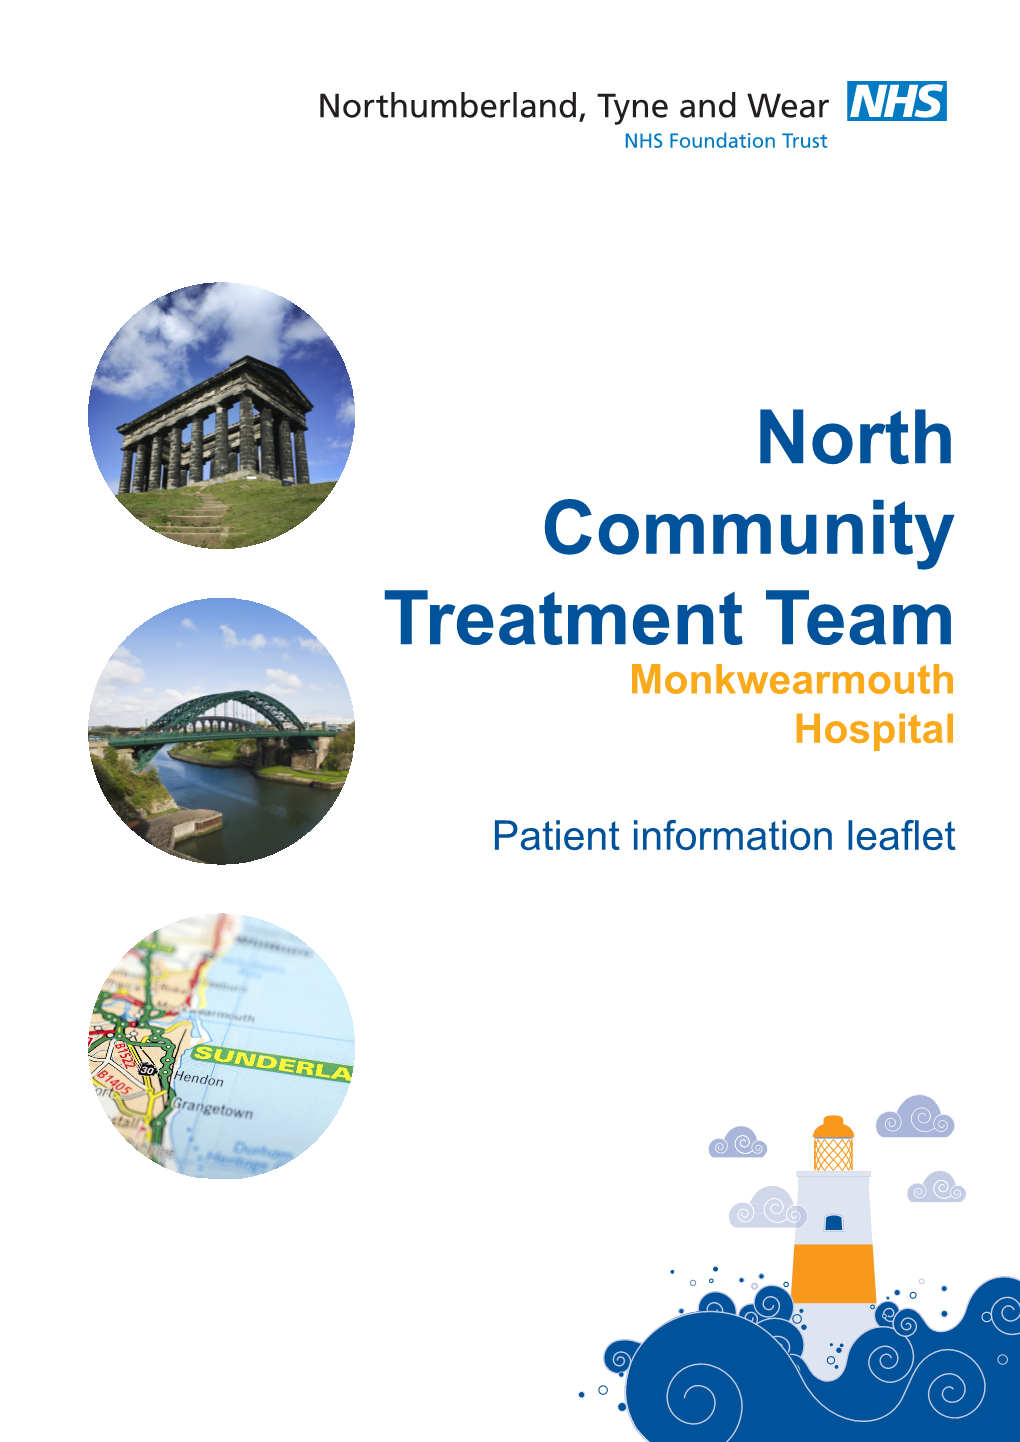 North Community Treatment Team Monkwearmouth Hospital